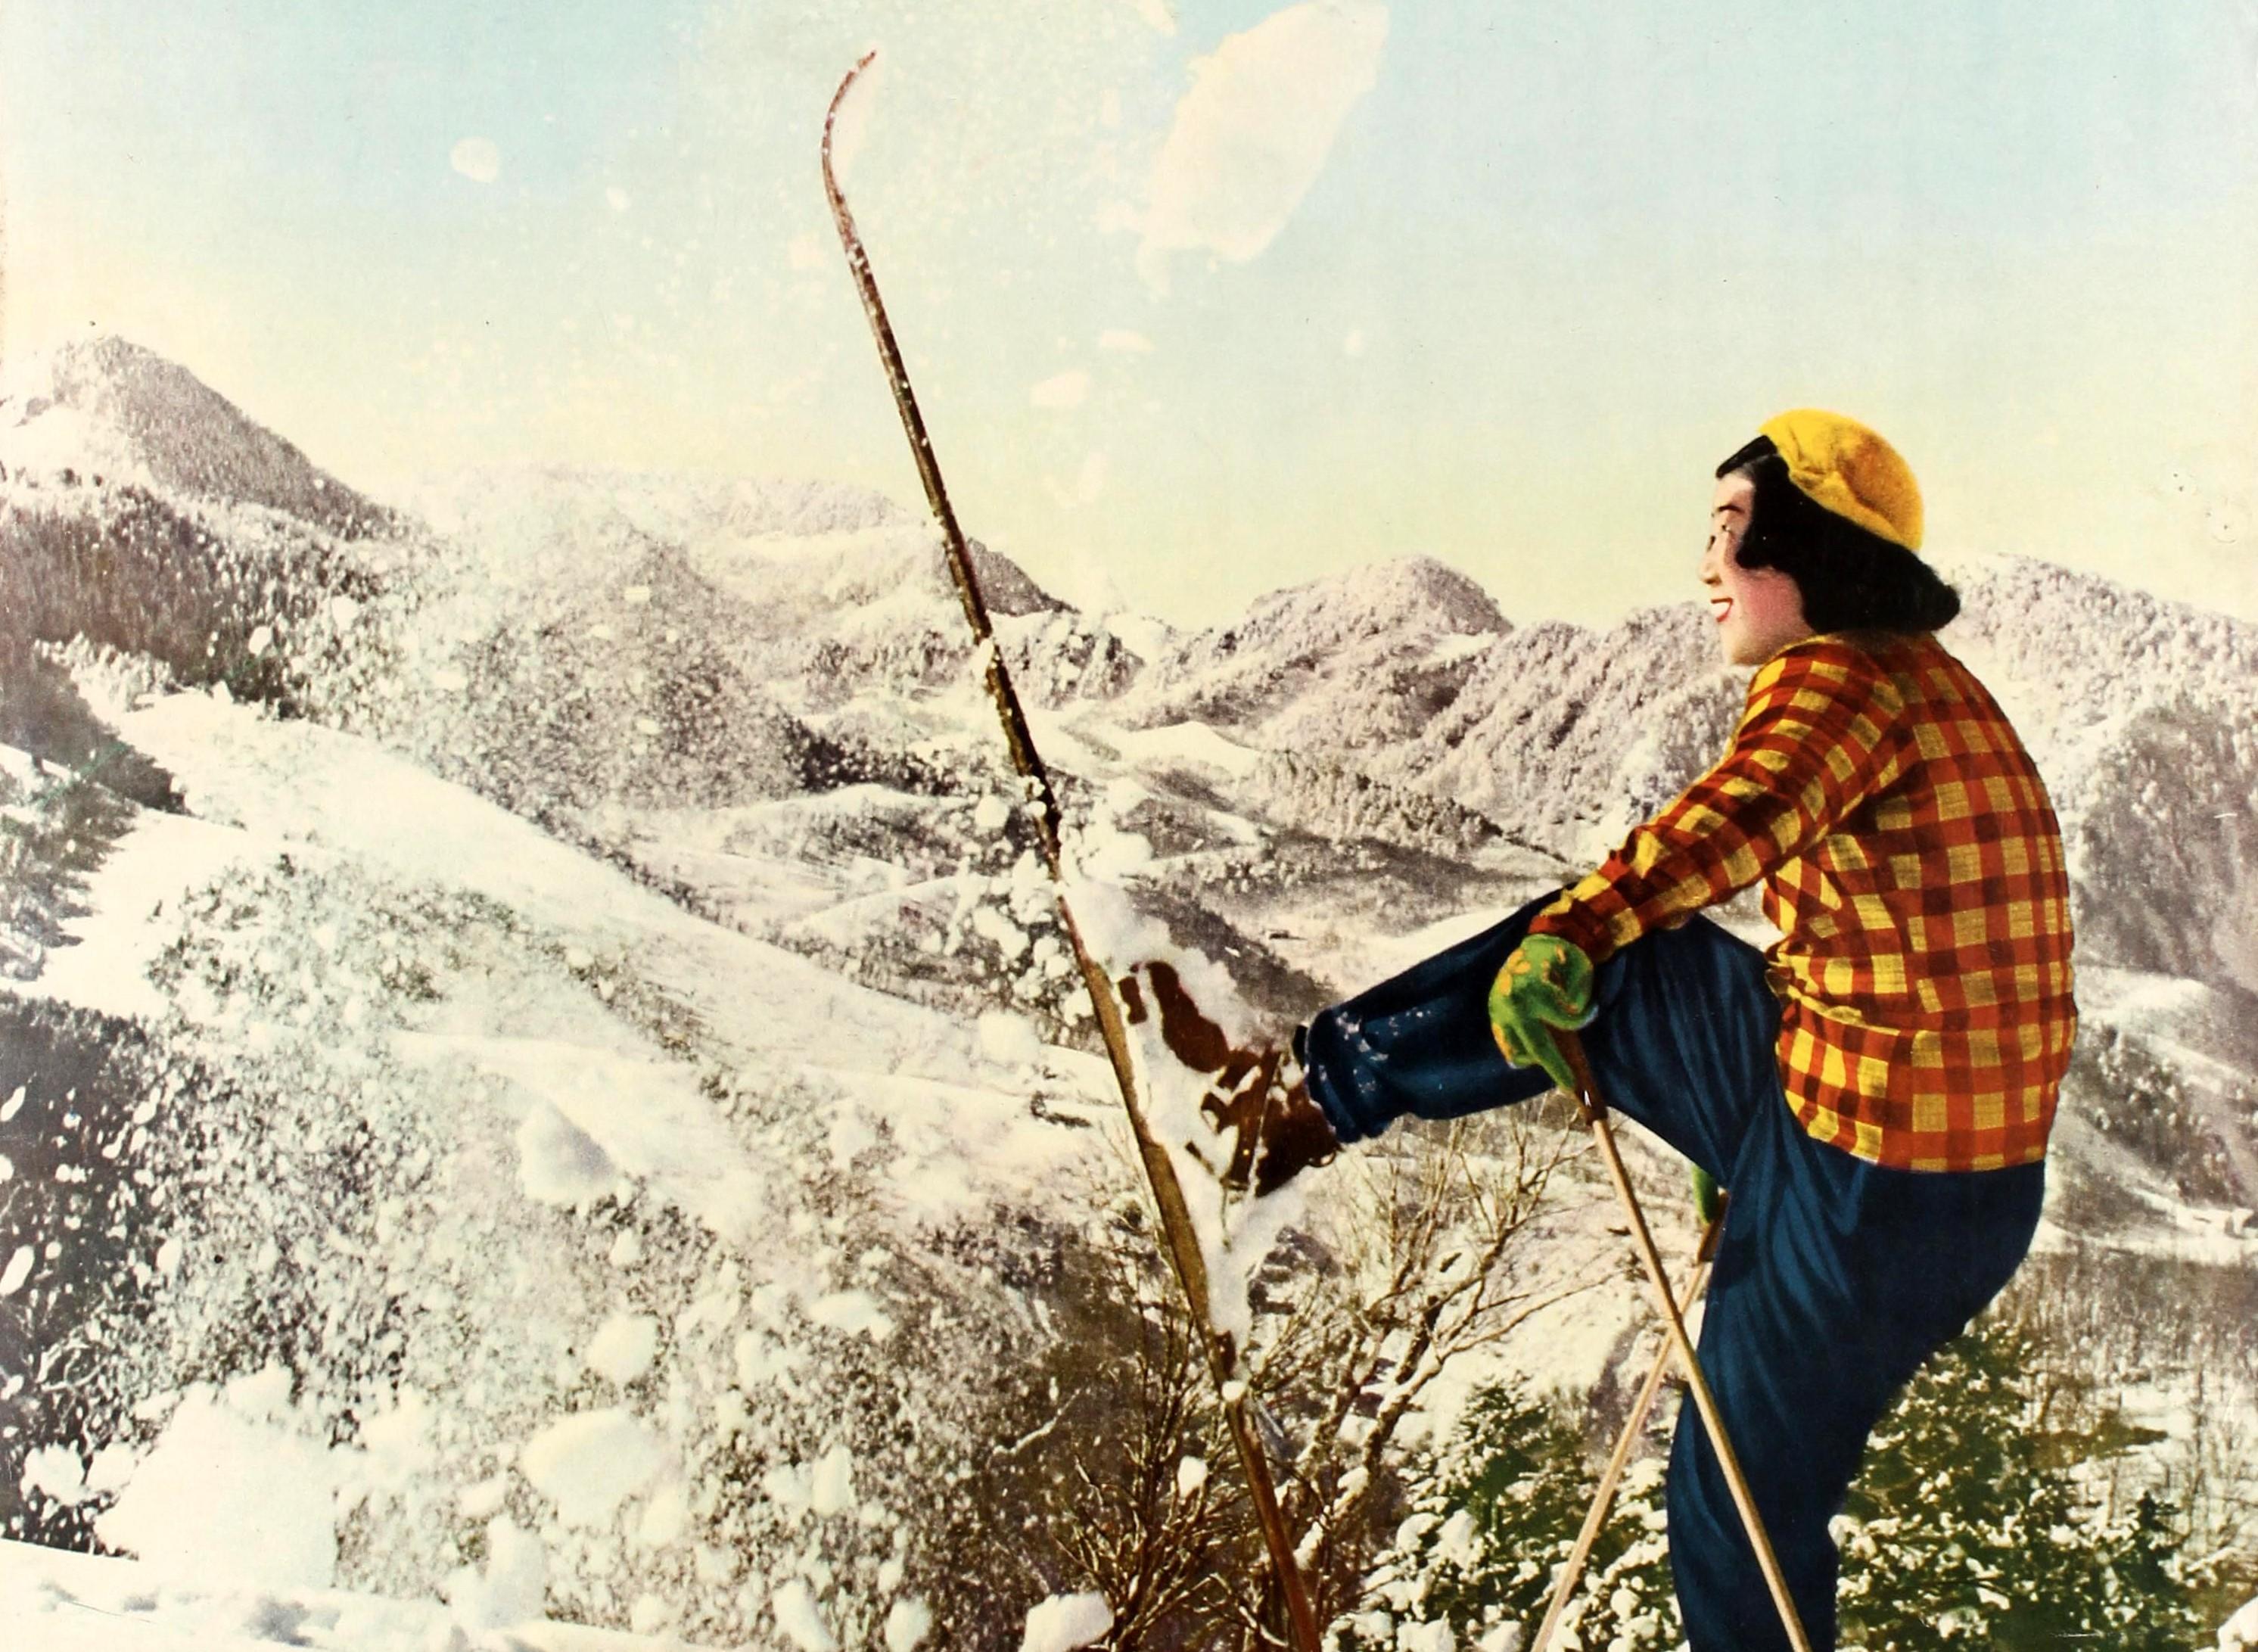 Japanese Original Vintage Winter Sport Skiing Poster Shiga Kogen Ski Resort Japan Skier